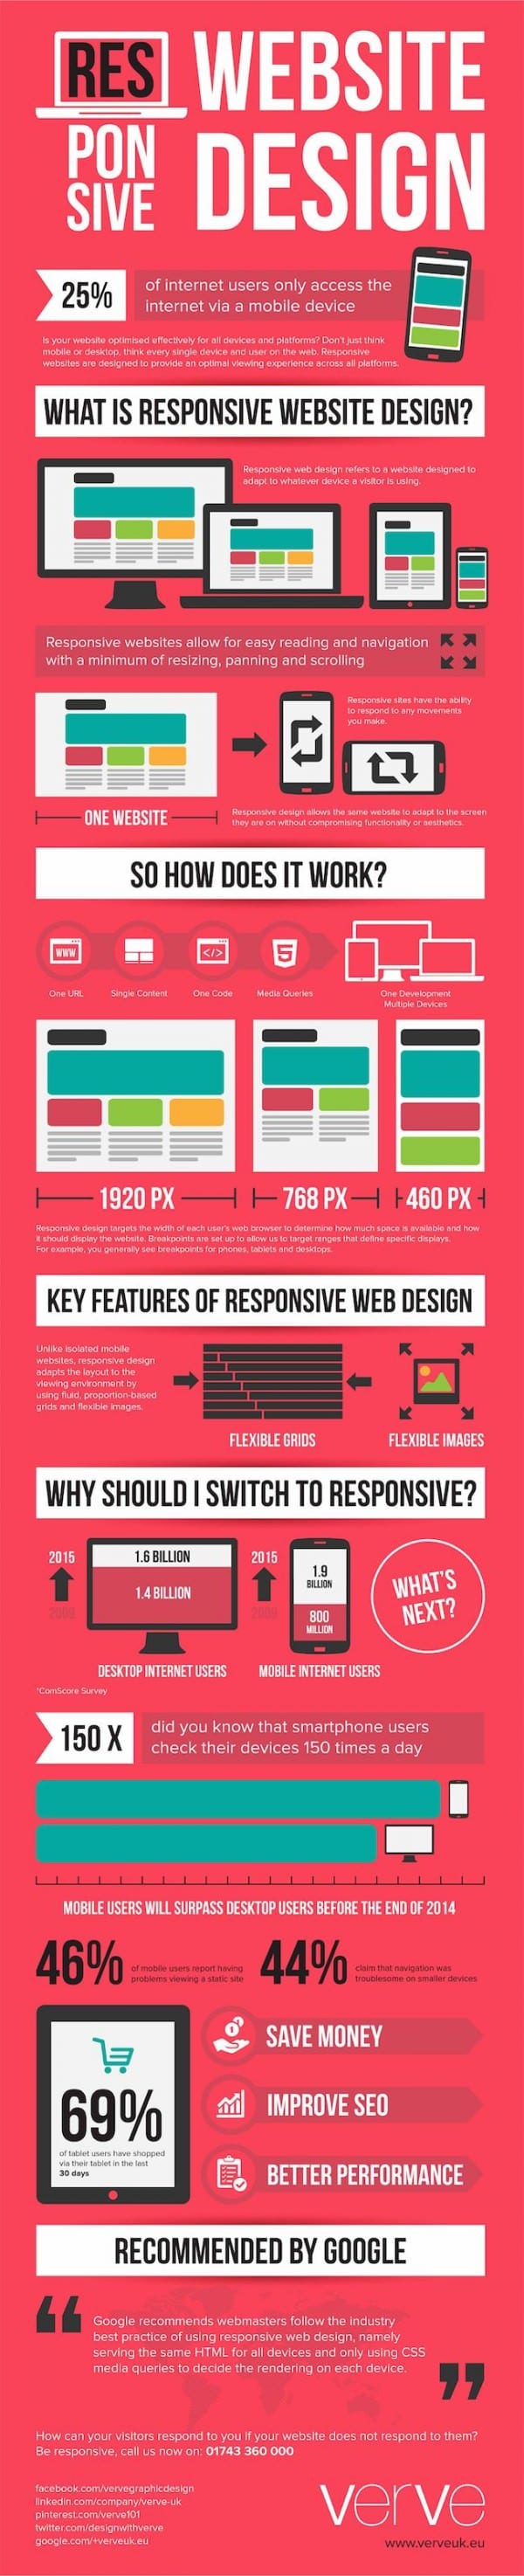 Best practice for Responsive Web Design [Infographic] | Smart Insights